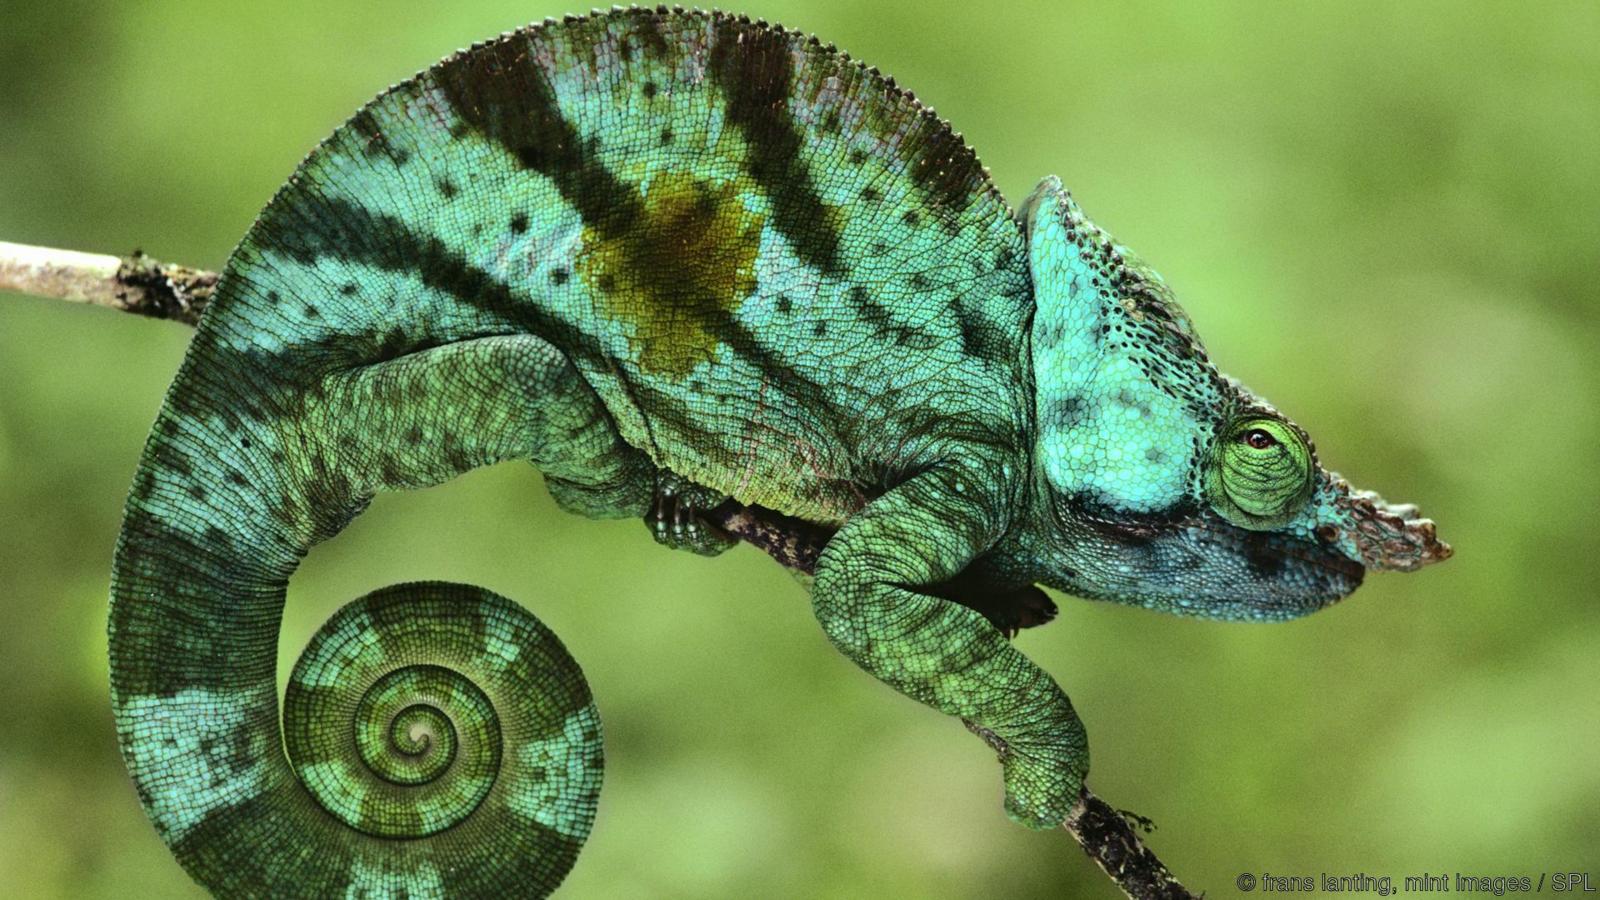 Parson's chameleon, Calumma parsonii, Madagascar.